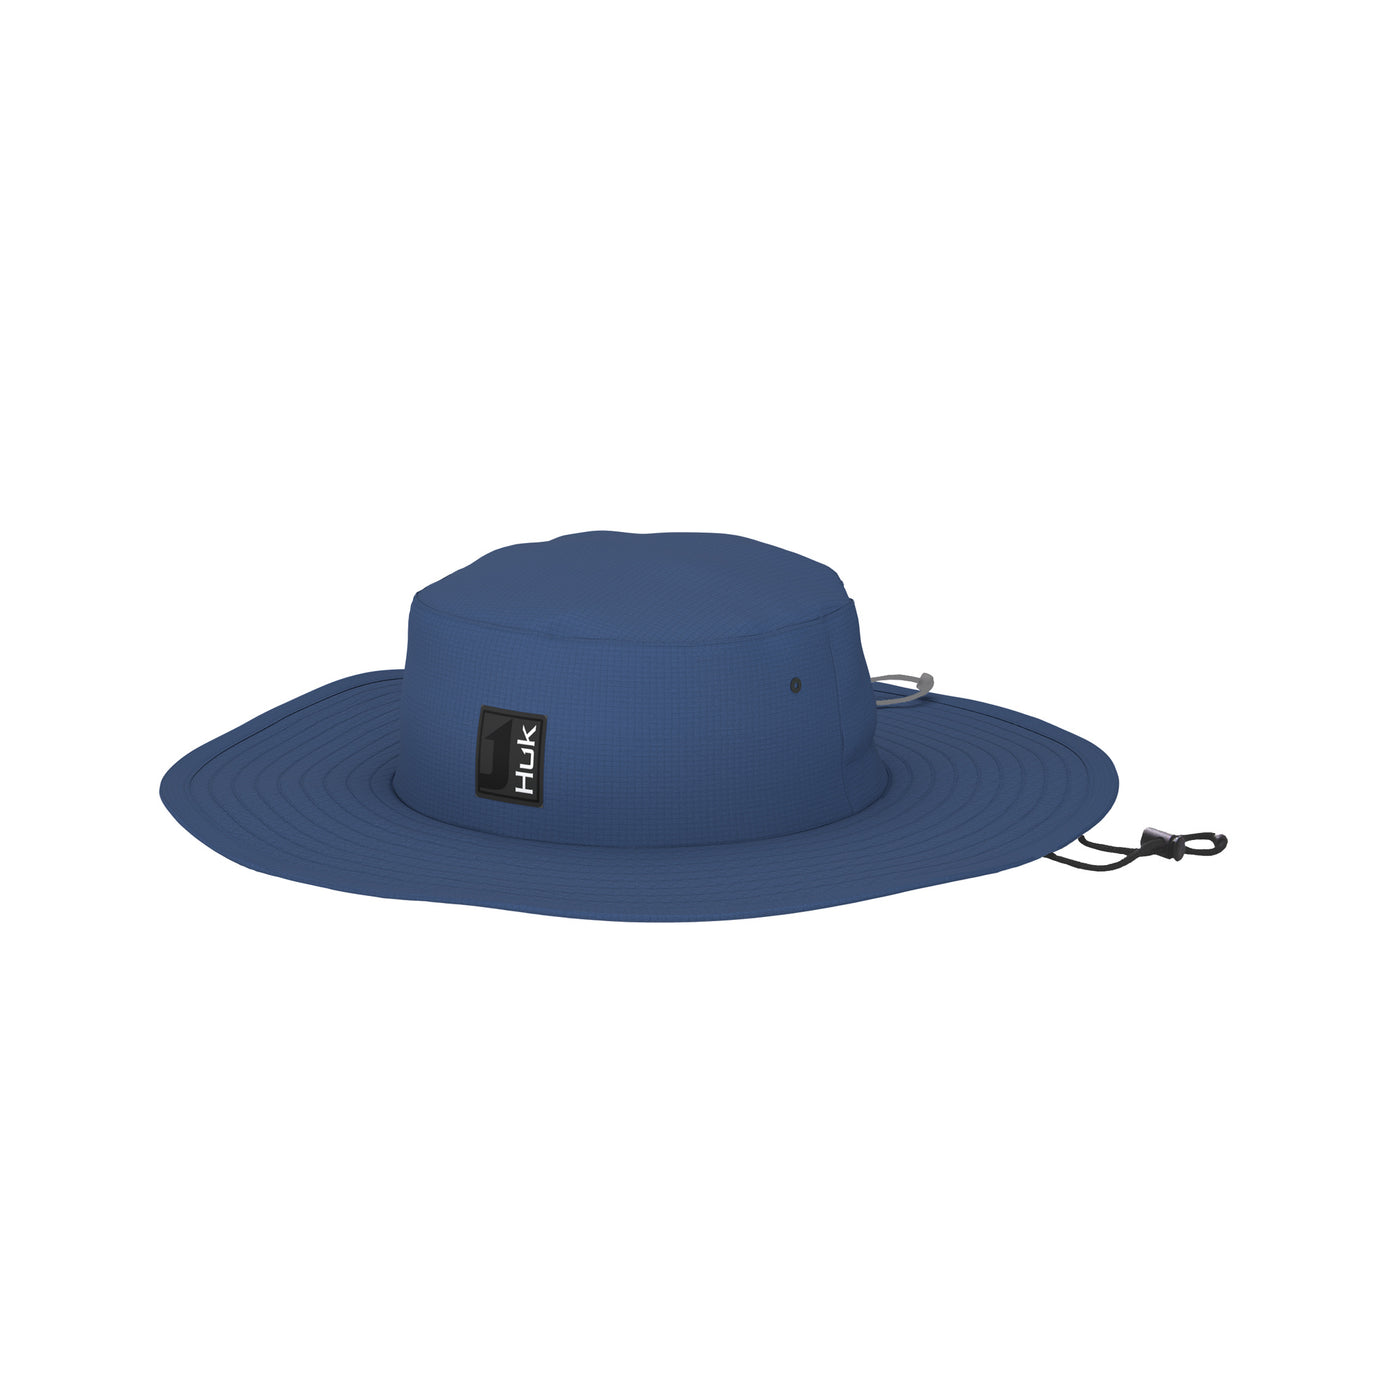 Huk A1A Boonie Hat